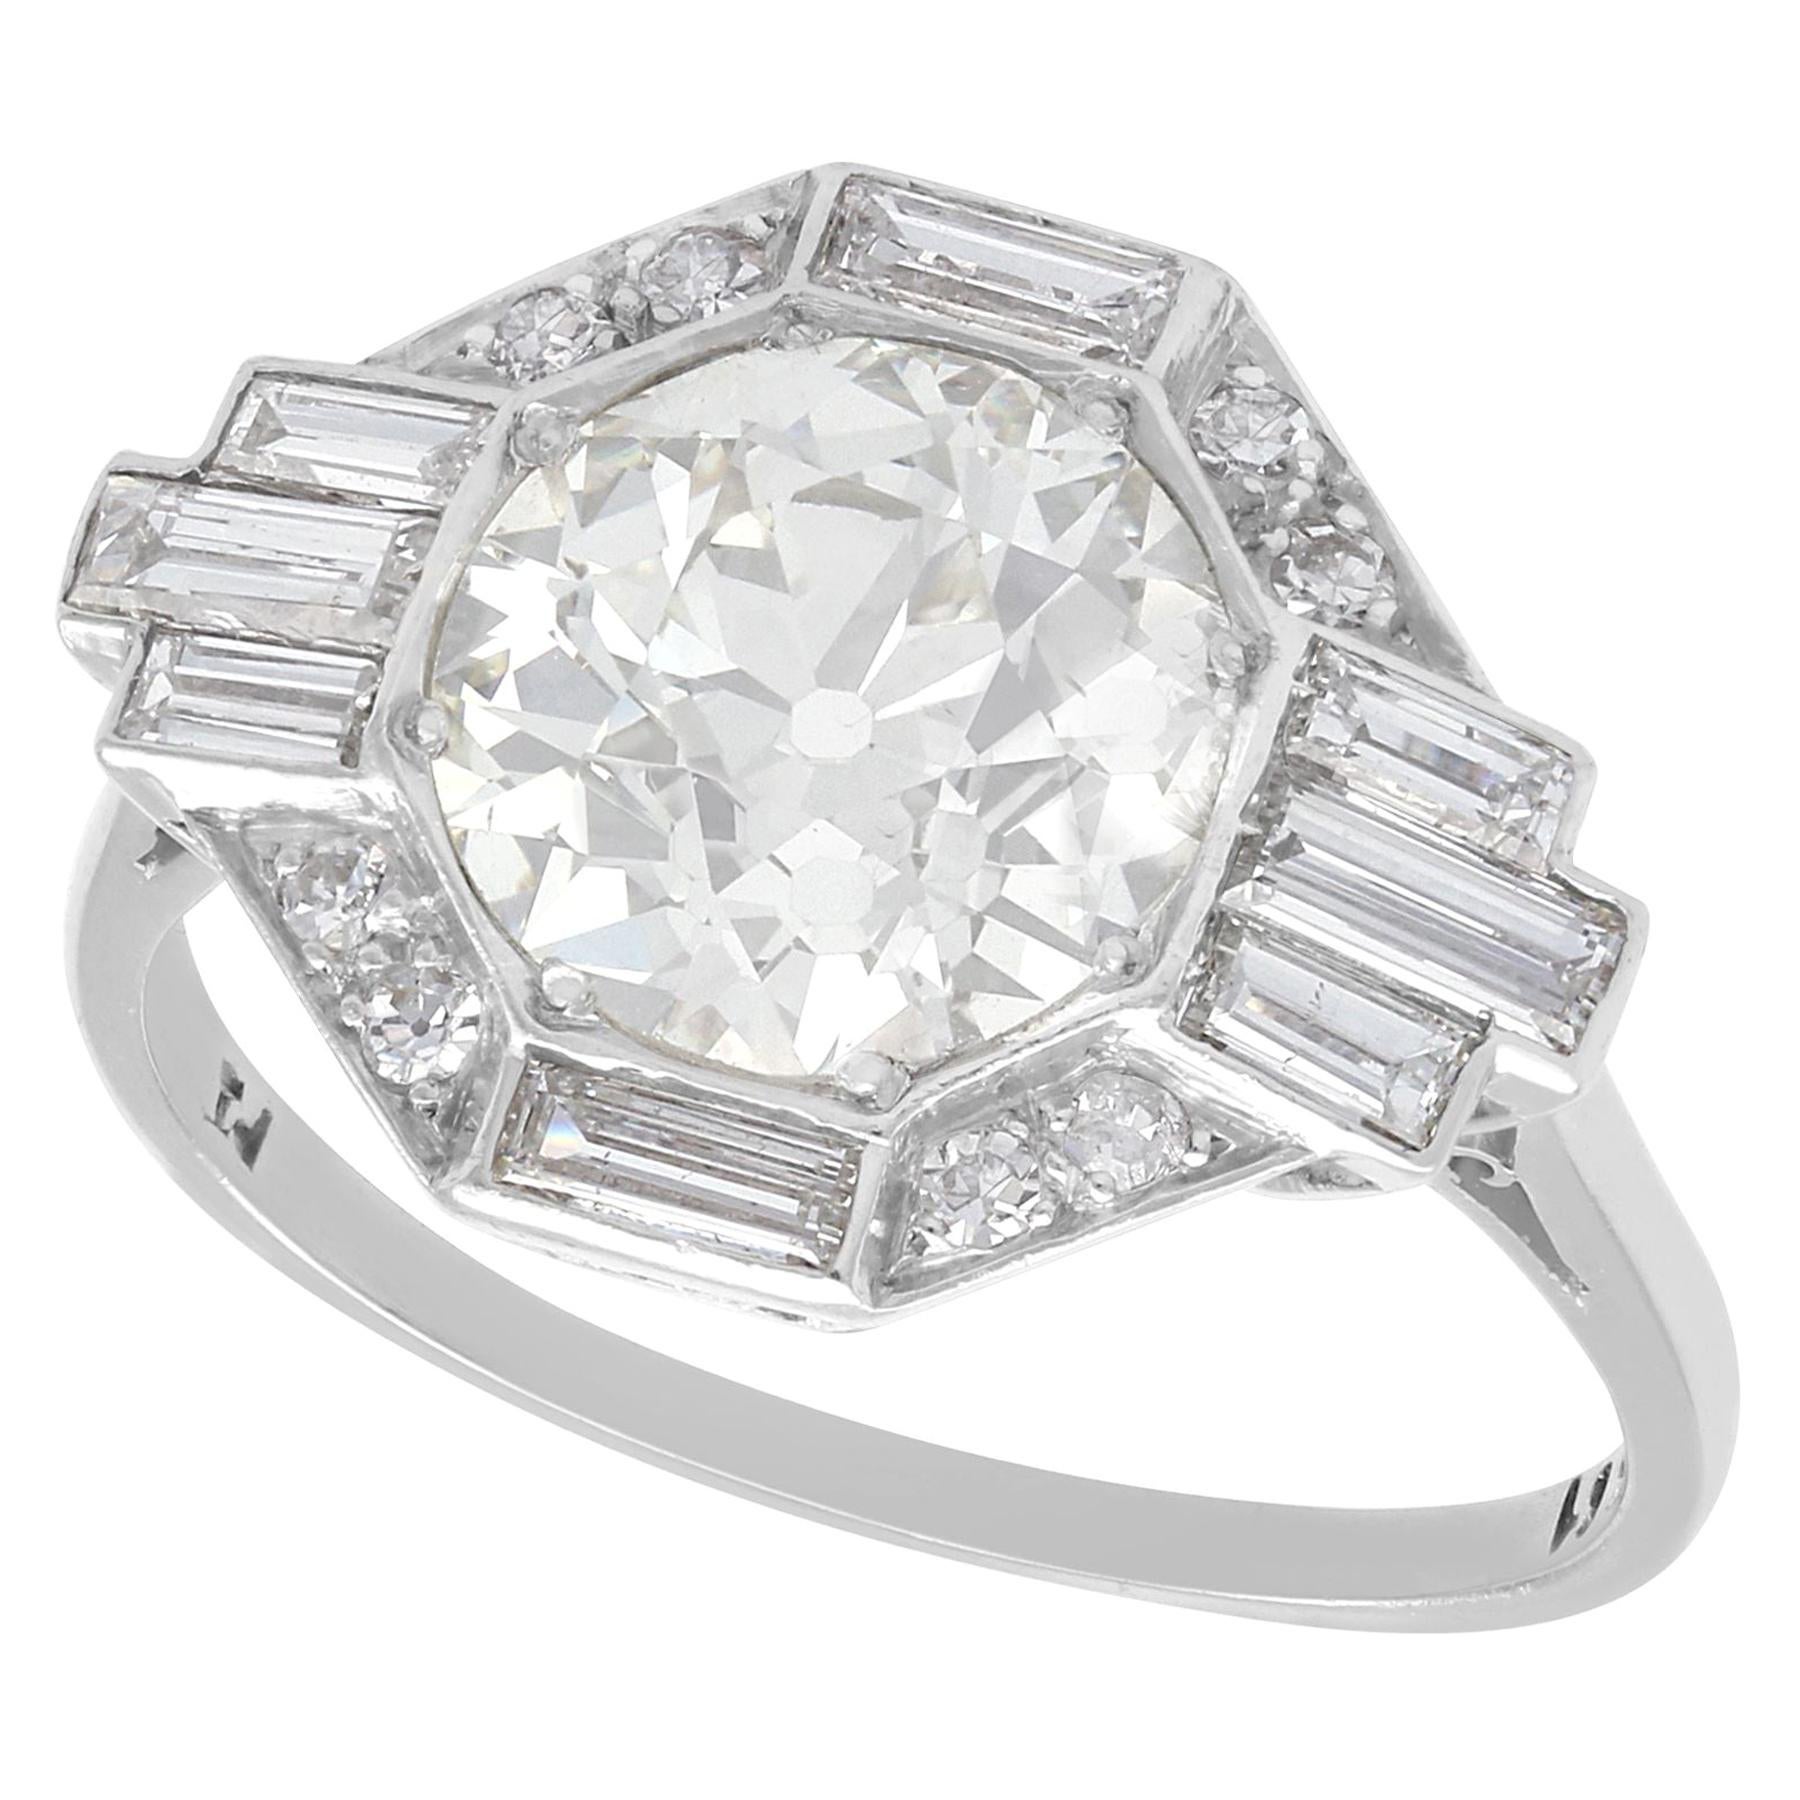 1930s Antique Art Deco 3.75 Carat Diamond and Platinum Engagement Ring For Sale